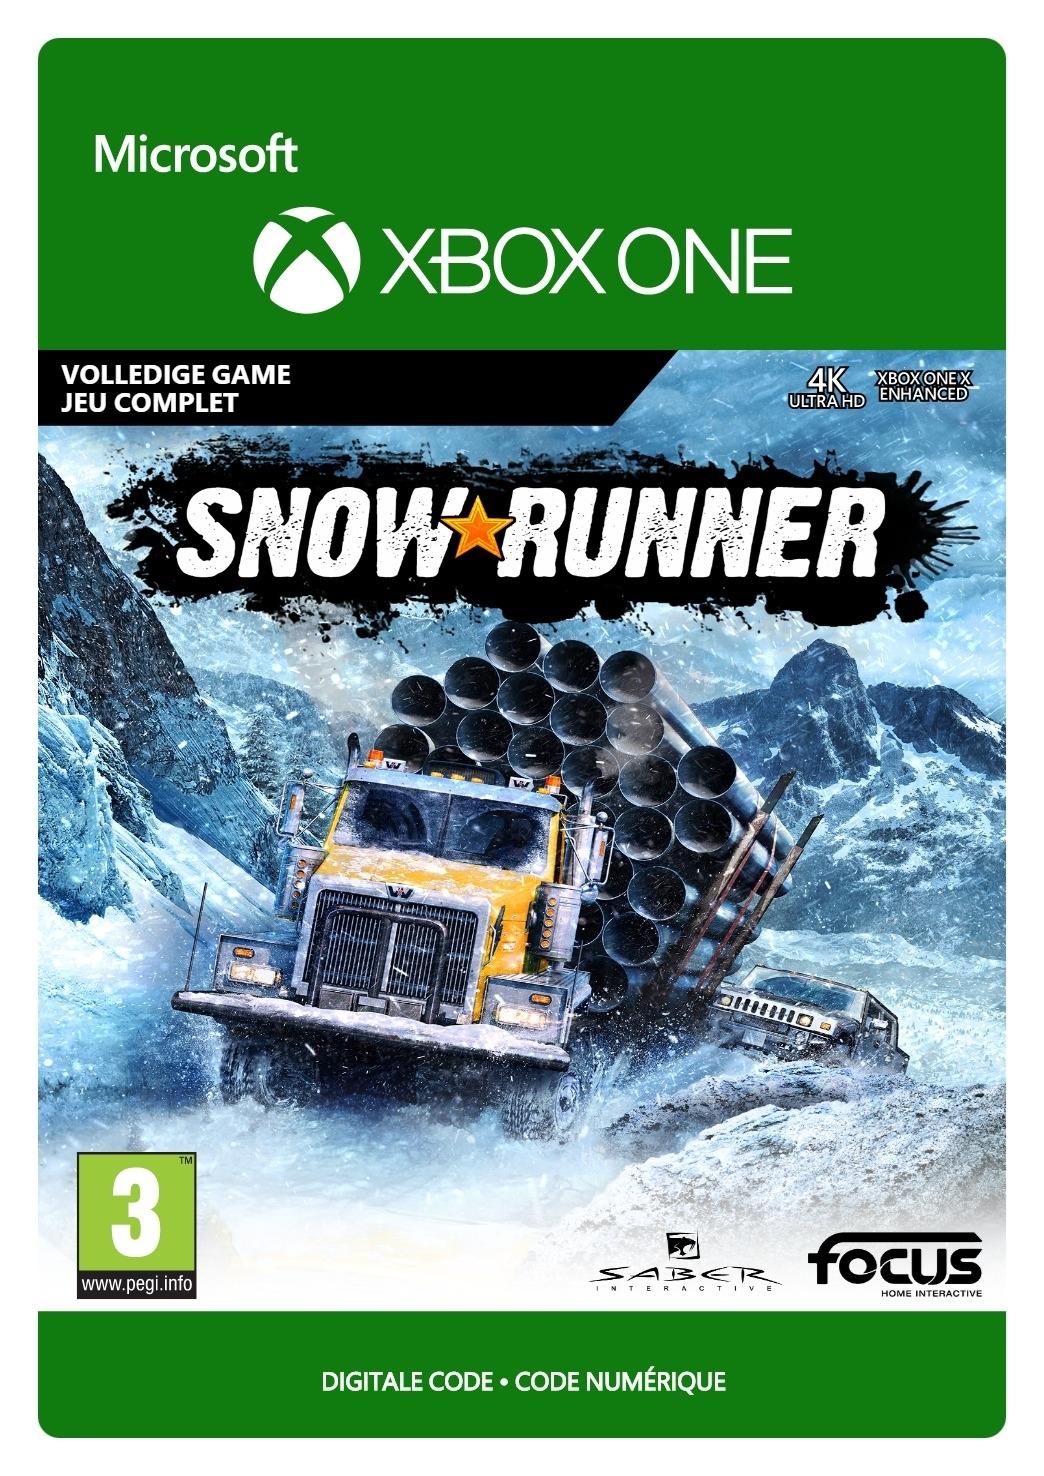 SnowRunner - Xbox One - Game | G3Q-00912 (e710fceb-8ef8-ce48-a6af-4aa6dfa56236)